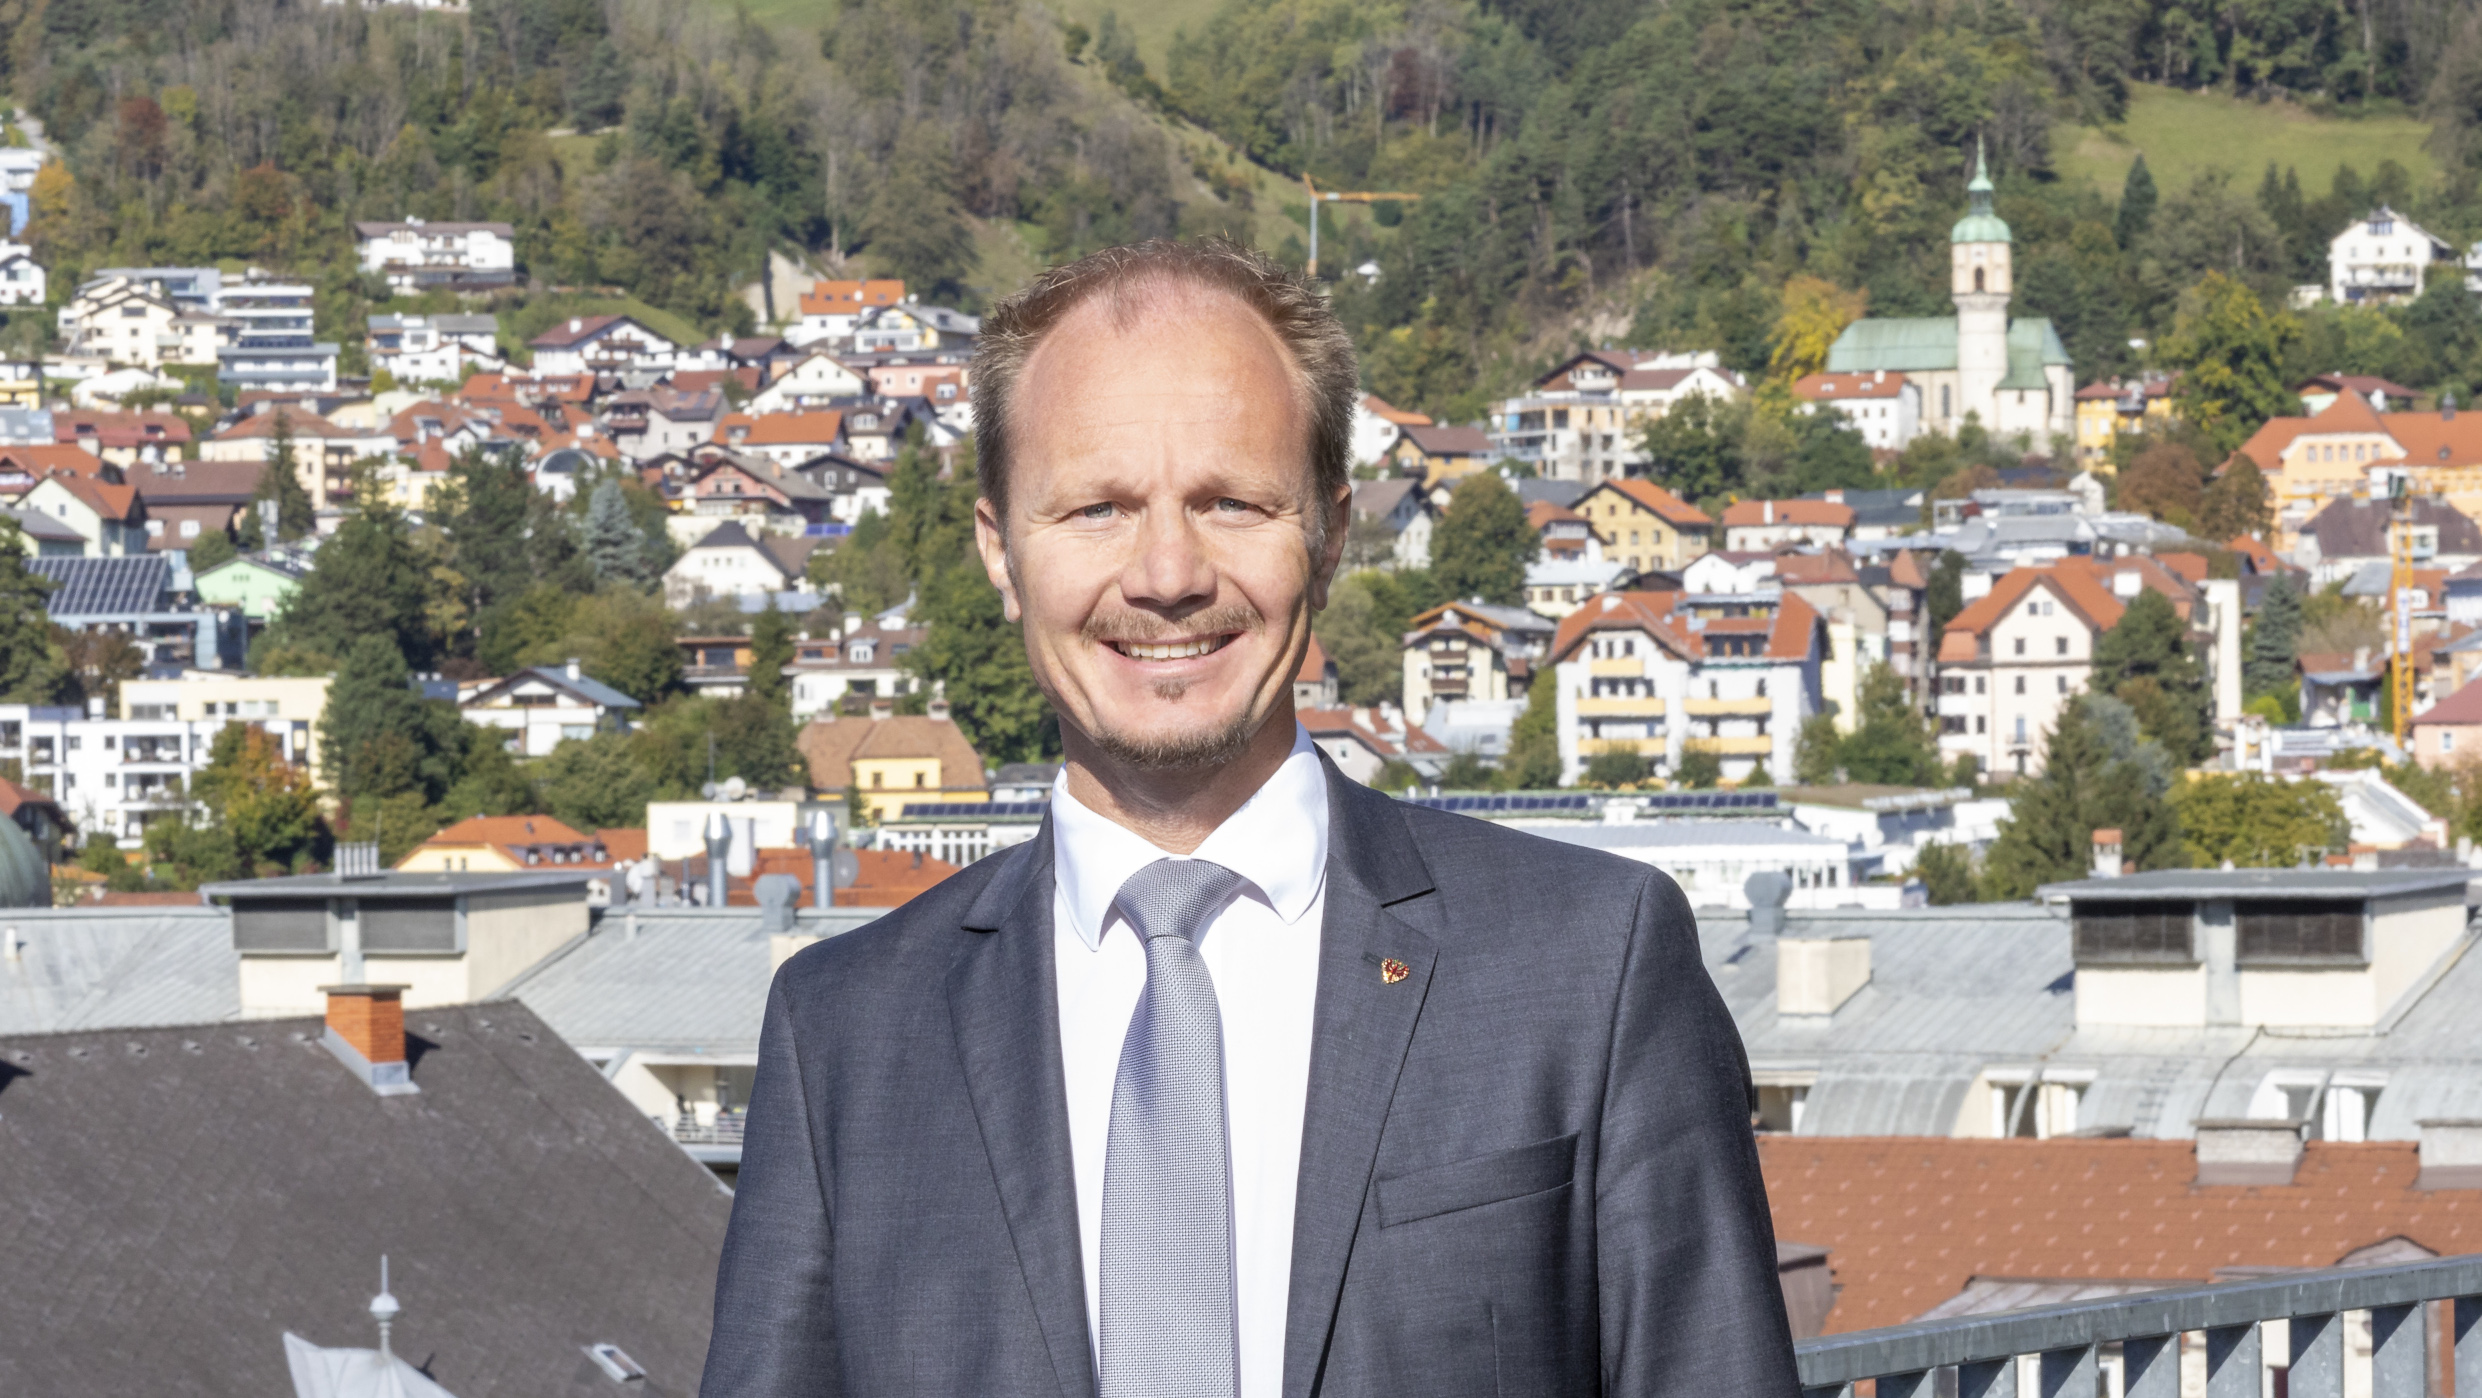 Johannes Anzengruber, Mayor of Innsbruck